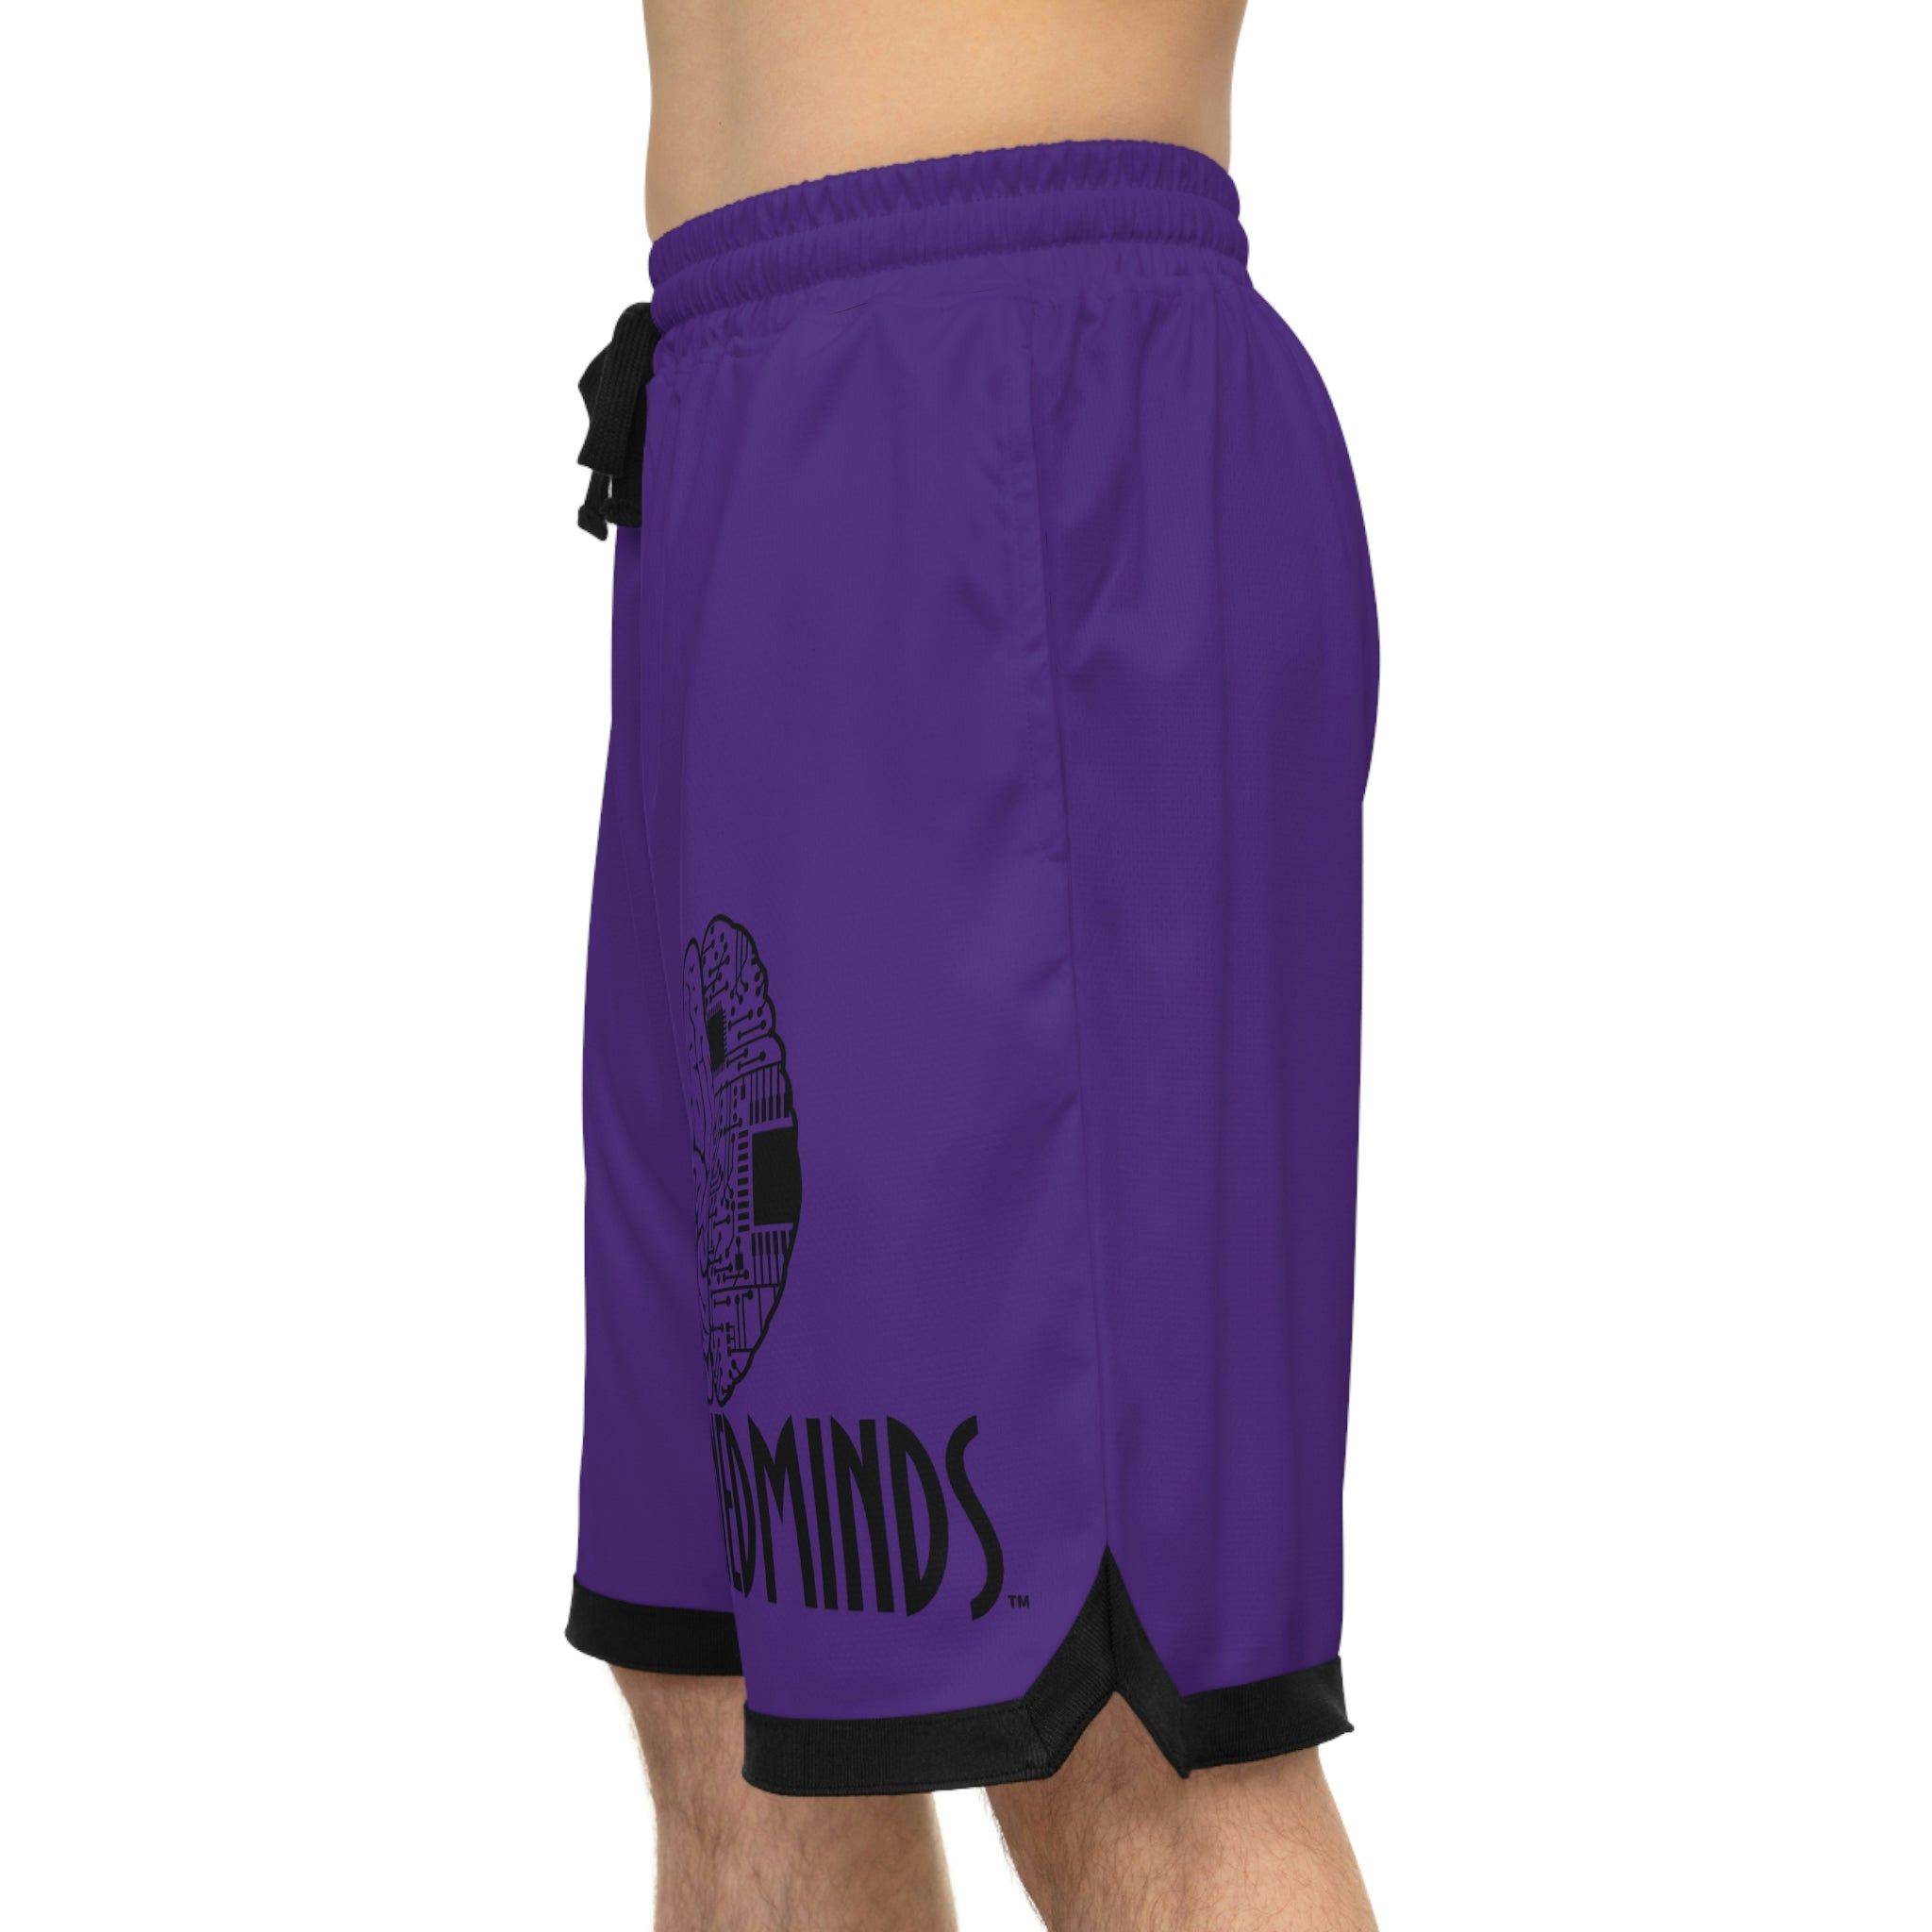 Combinedminds Basketball Shorts Purple/Black Logo